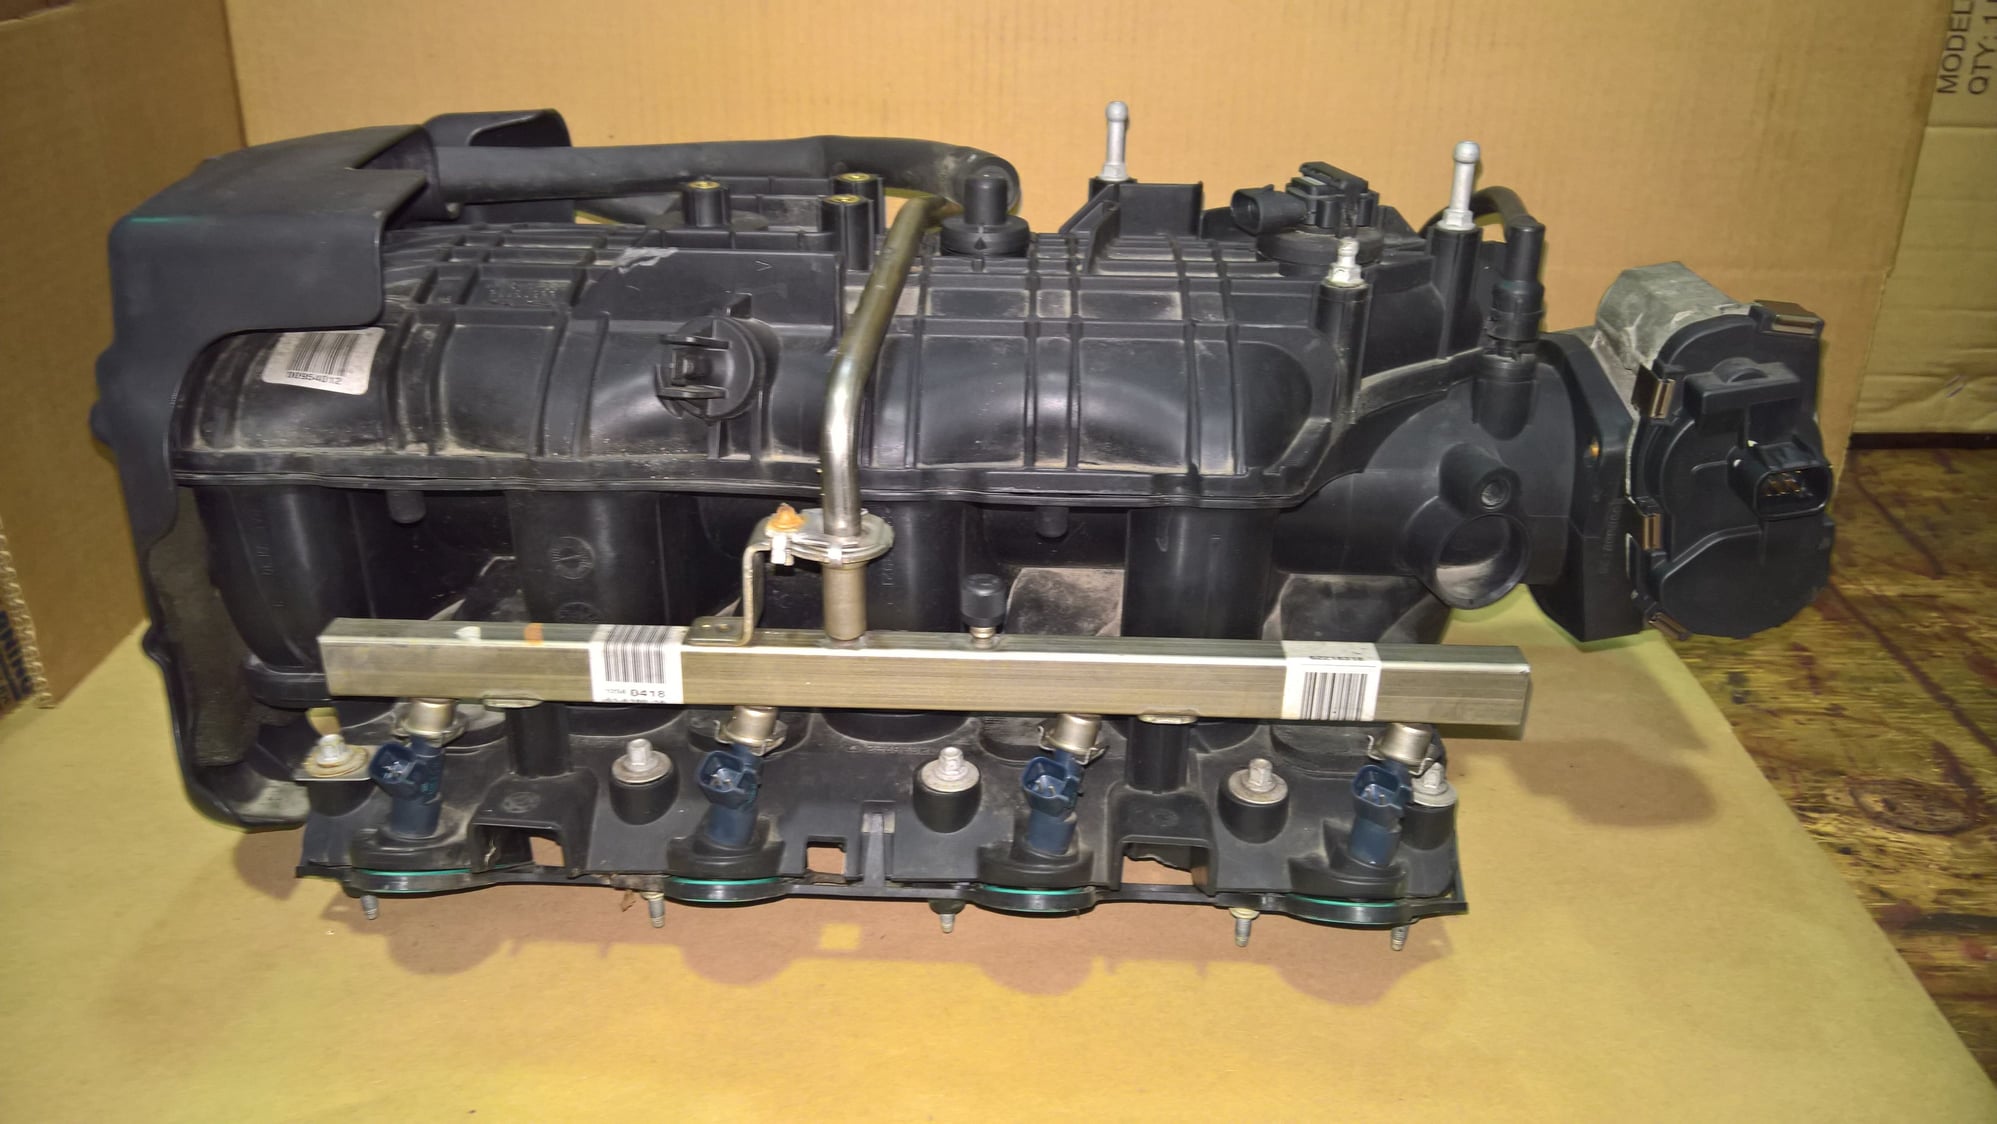 Engine - Internals - 799 heads / 5.3l pistons / rockers / intake - Used - Westland, MI 48185, United States